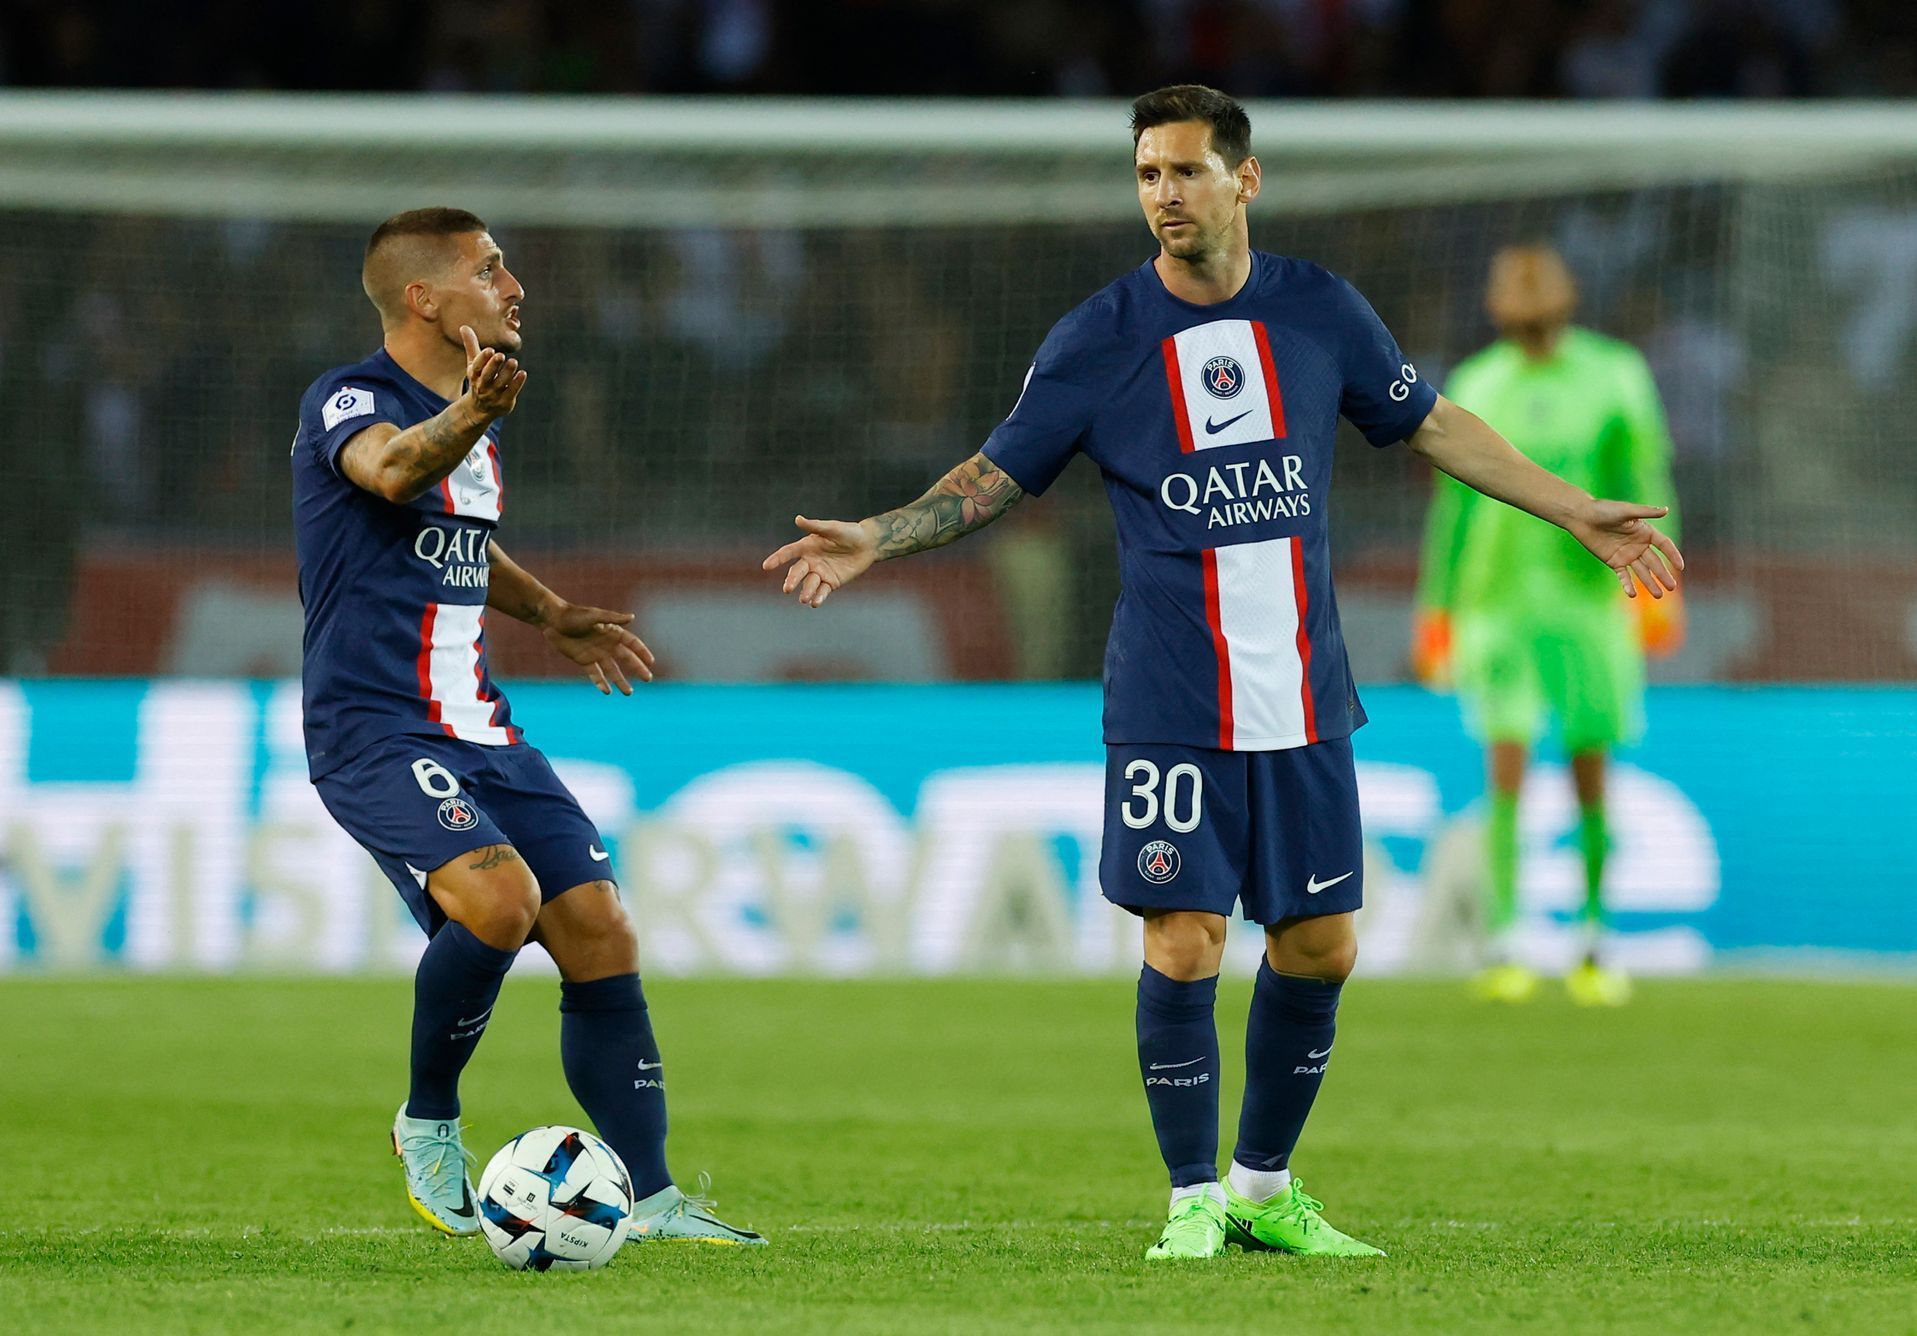 Ligue 1 - Paris St Germain v AS Monaco